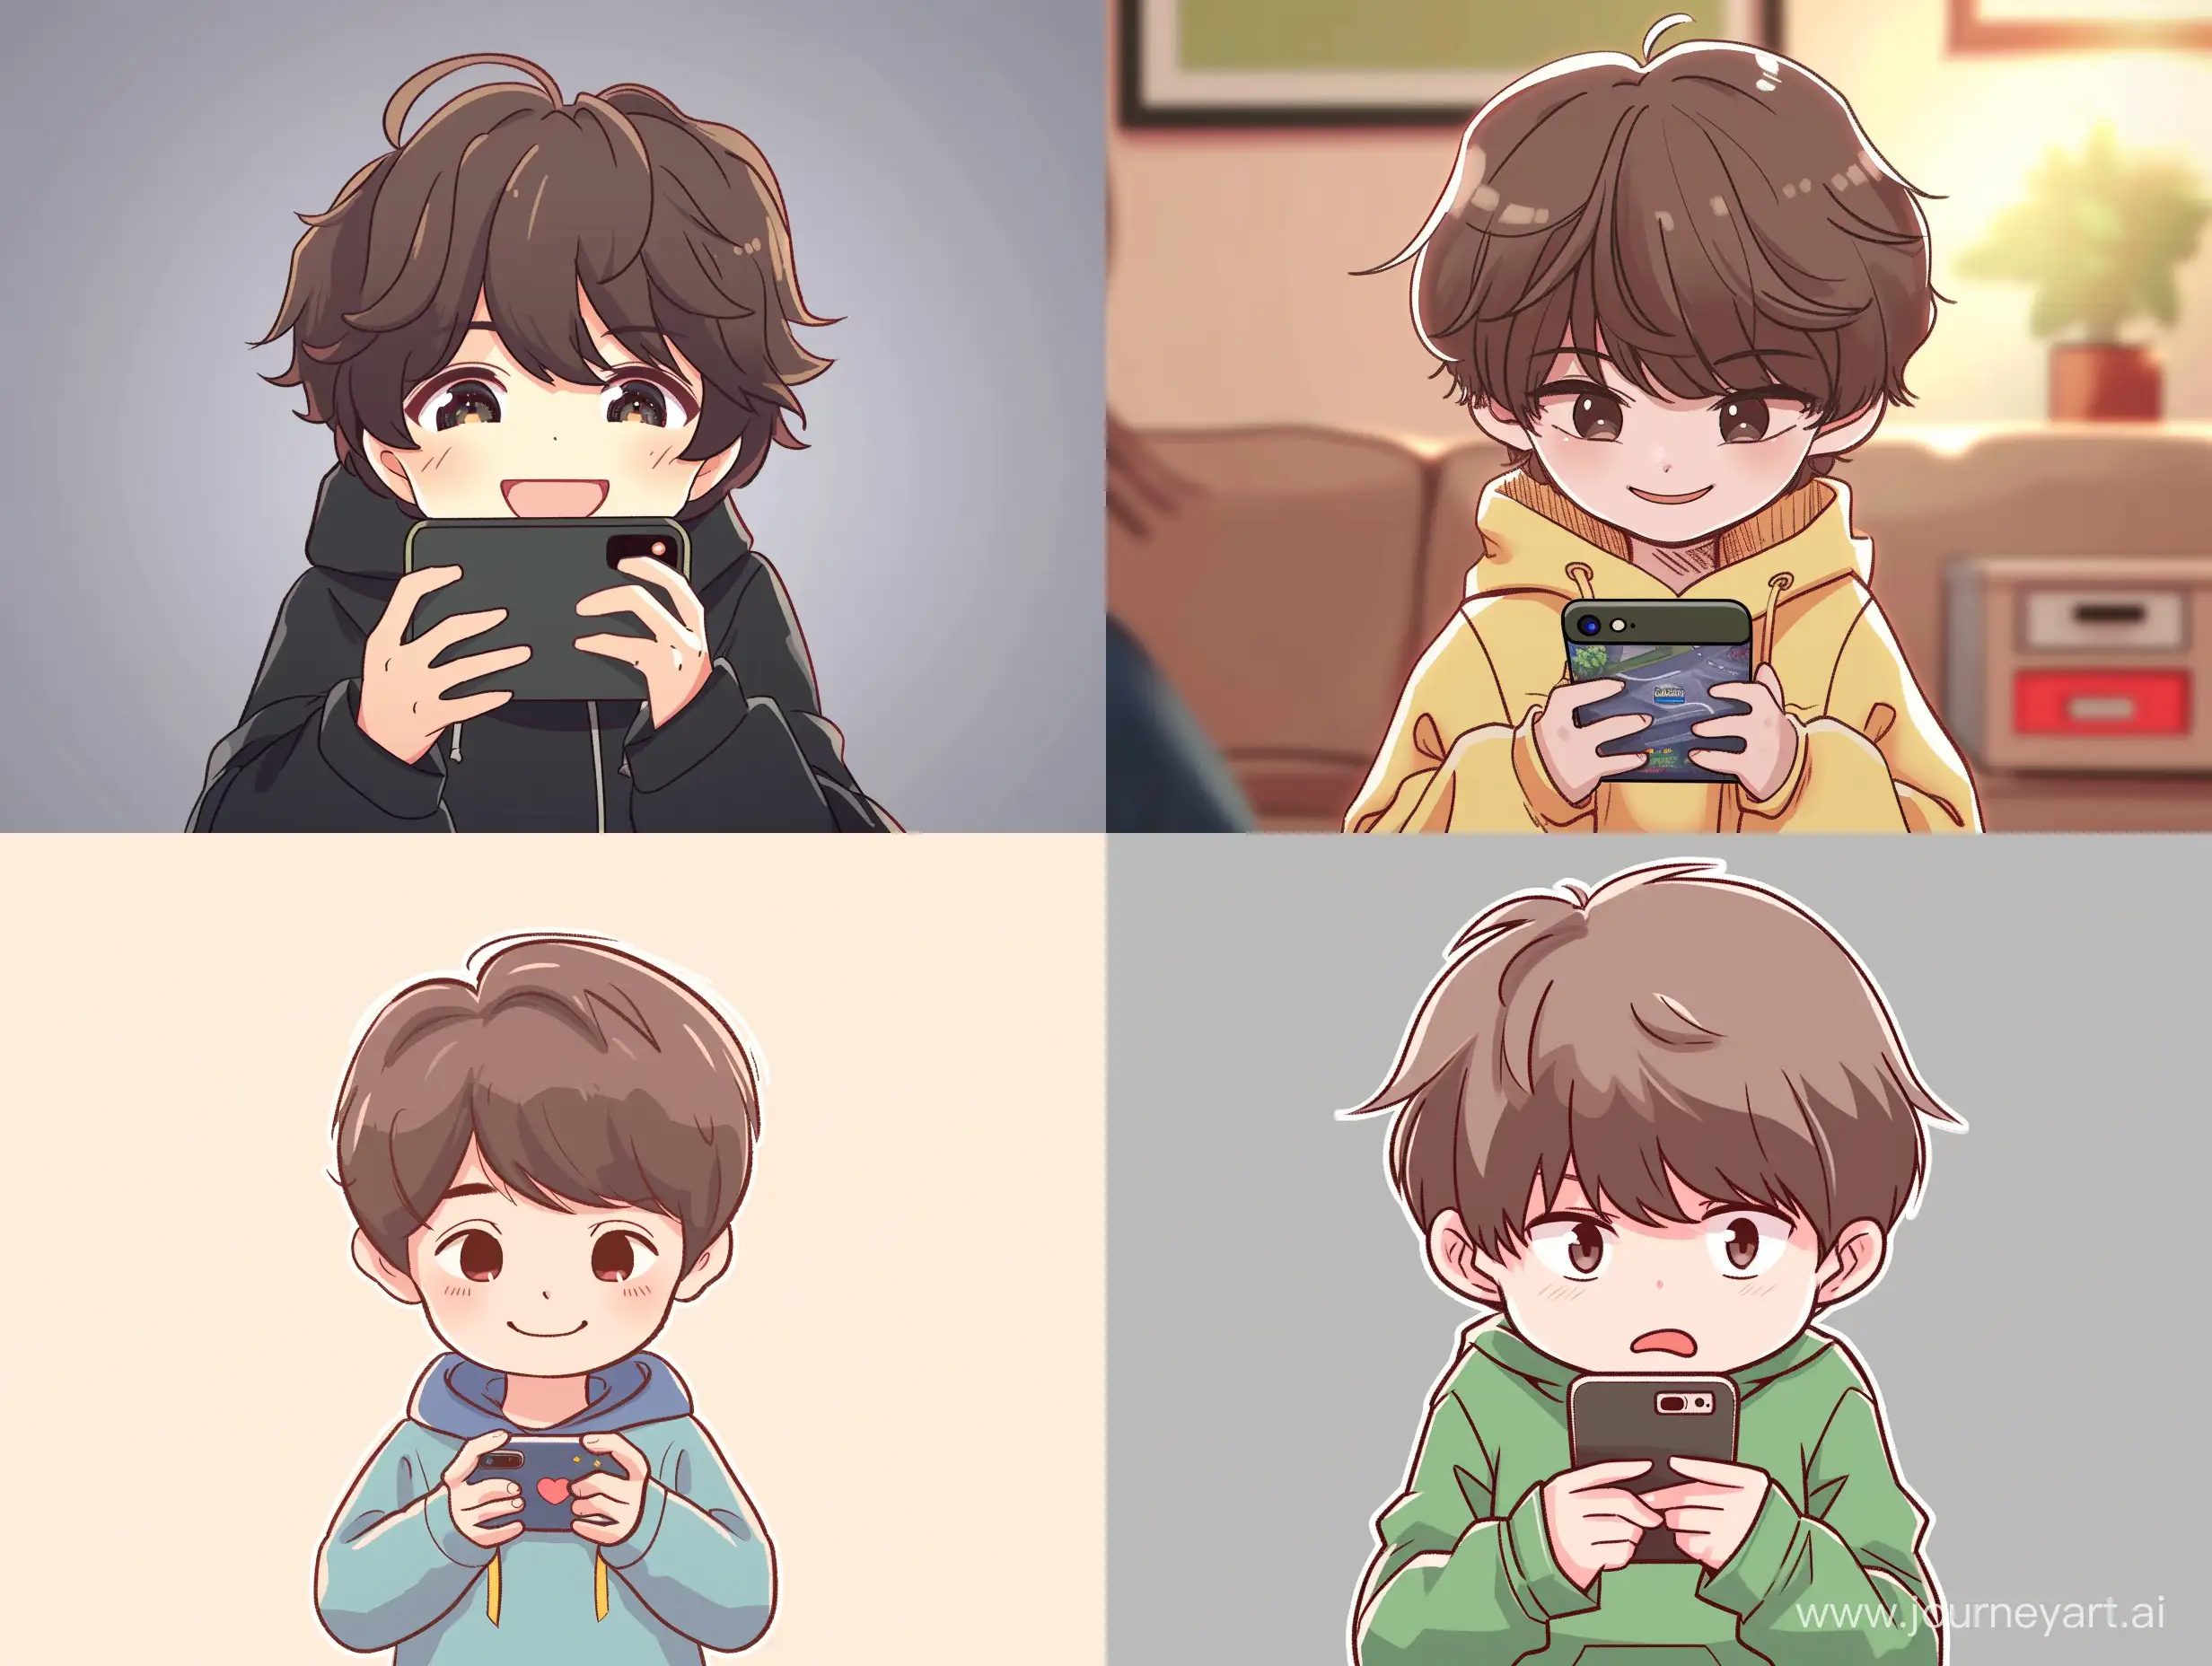 Confident-Chibi-Boy-Playing-Game-on-Phone-HighQuality-Anime-Style-Art